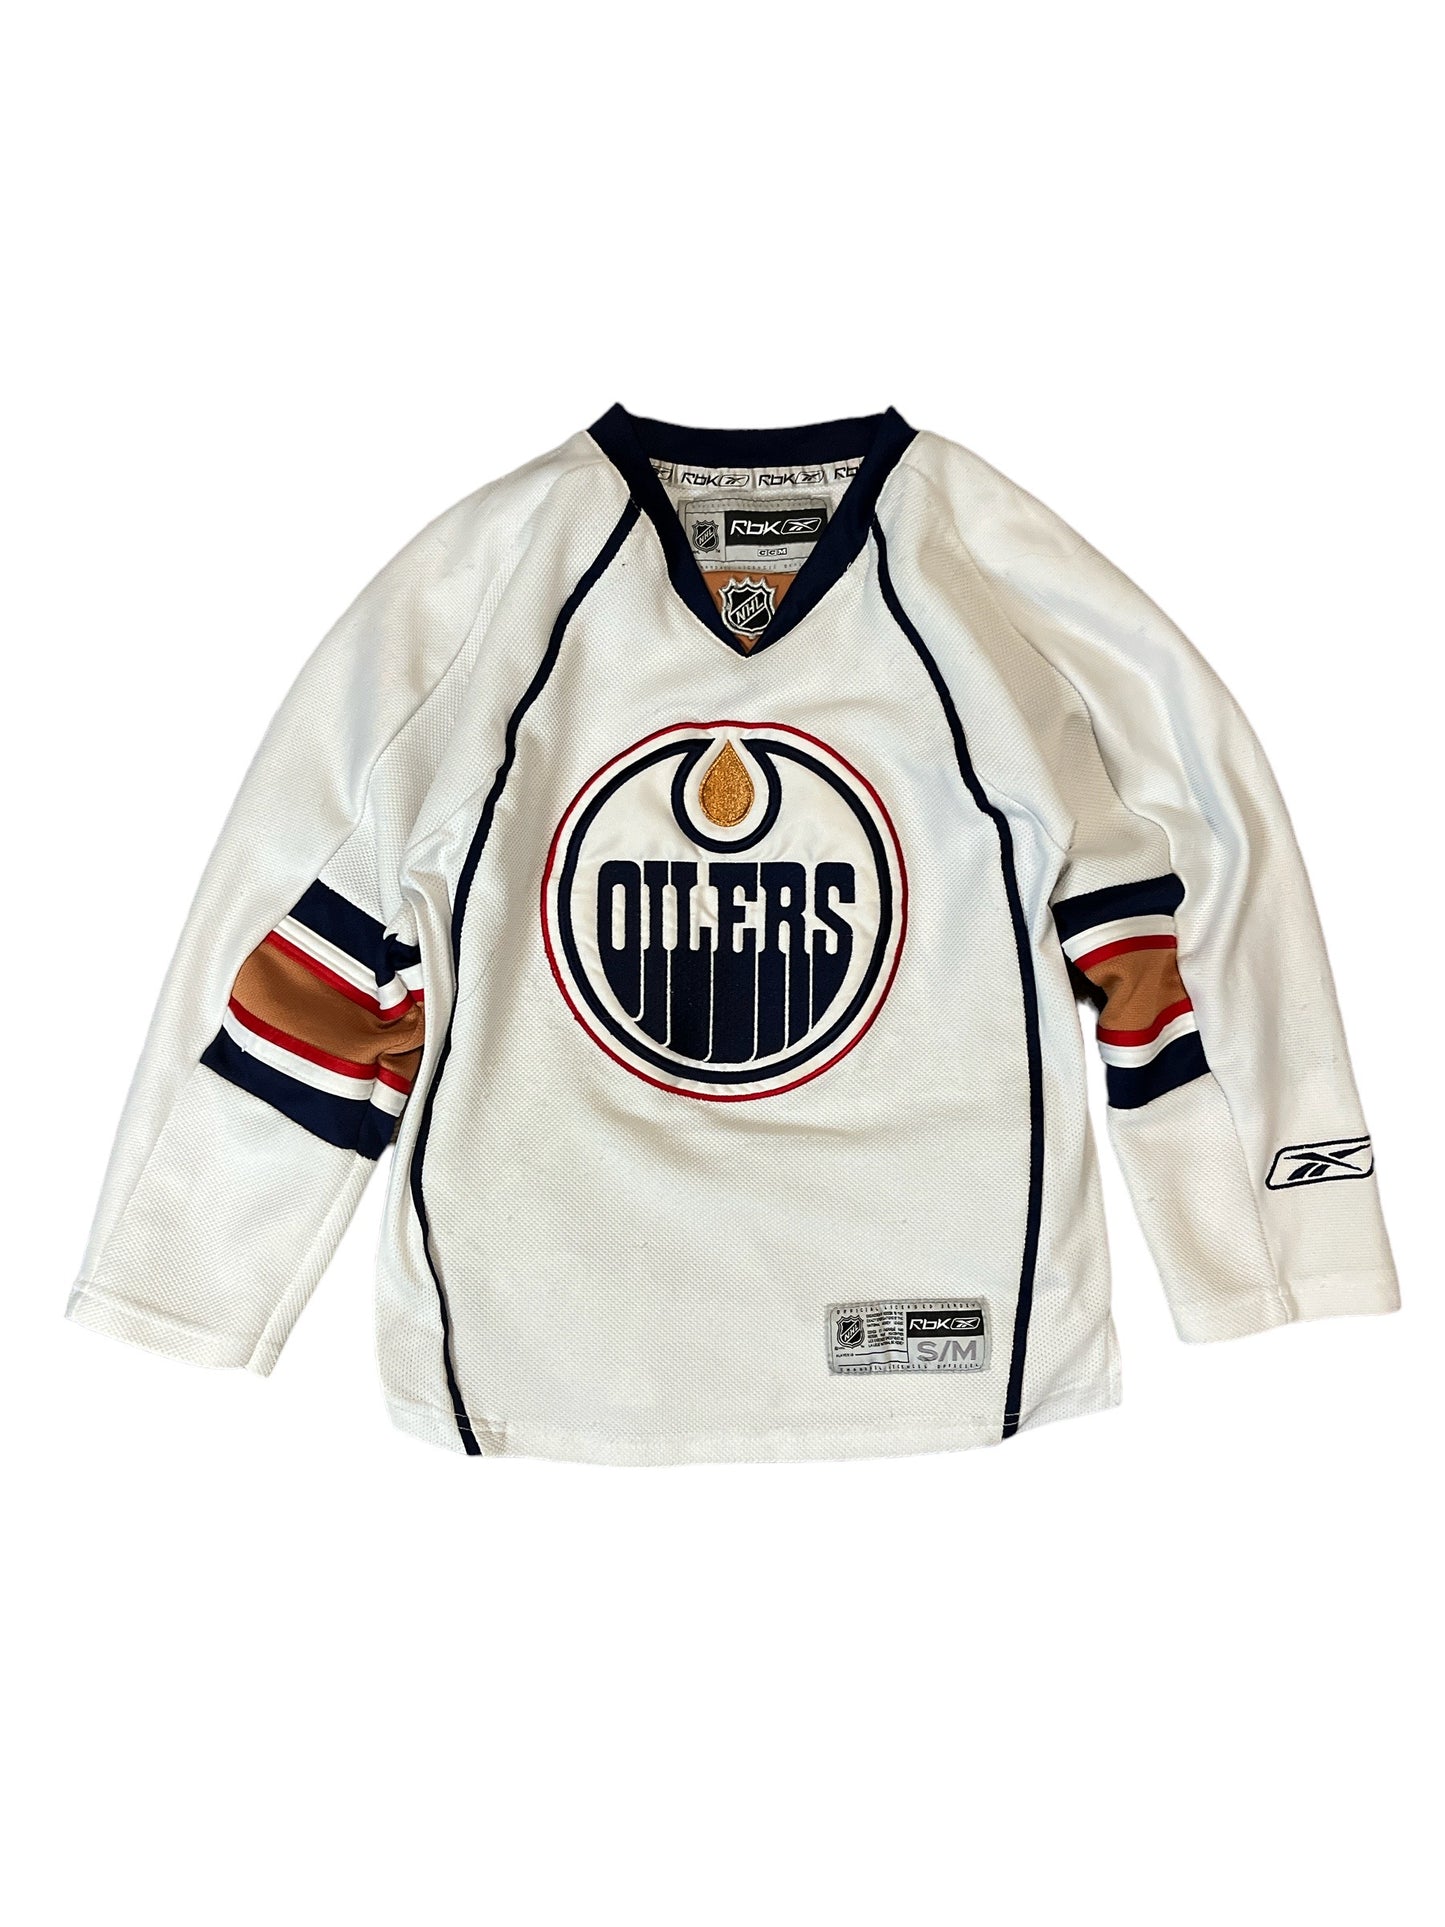 NHL CCM Reebok Edmonton Oilers Youth Jersey